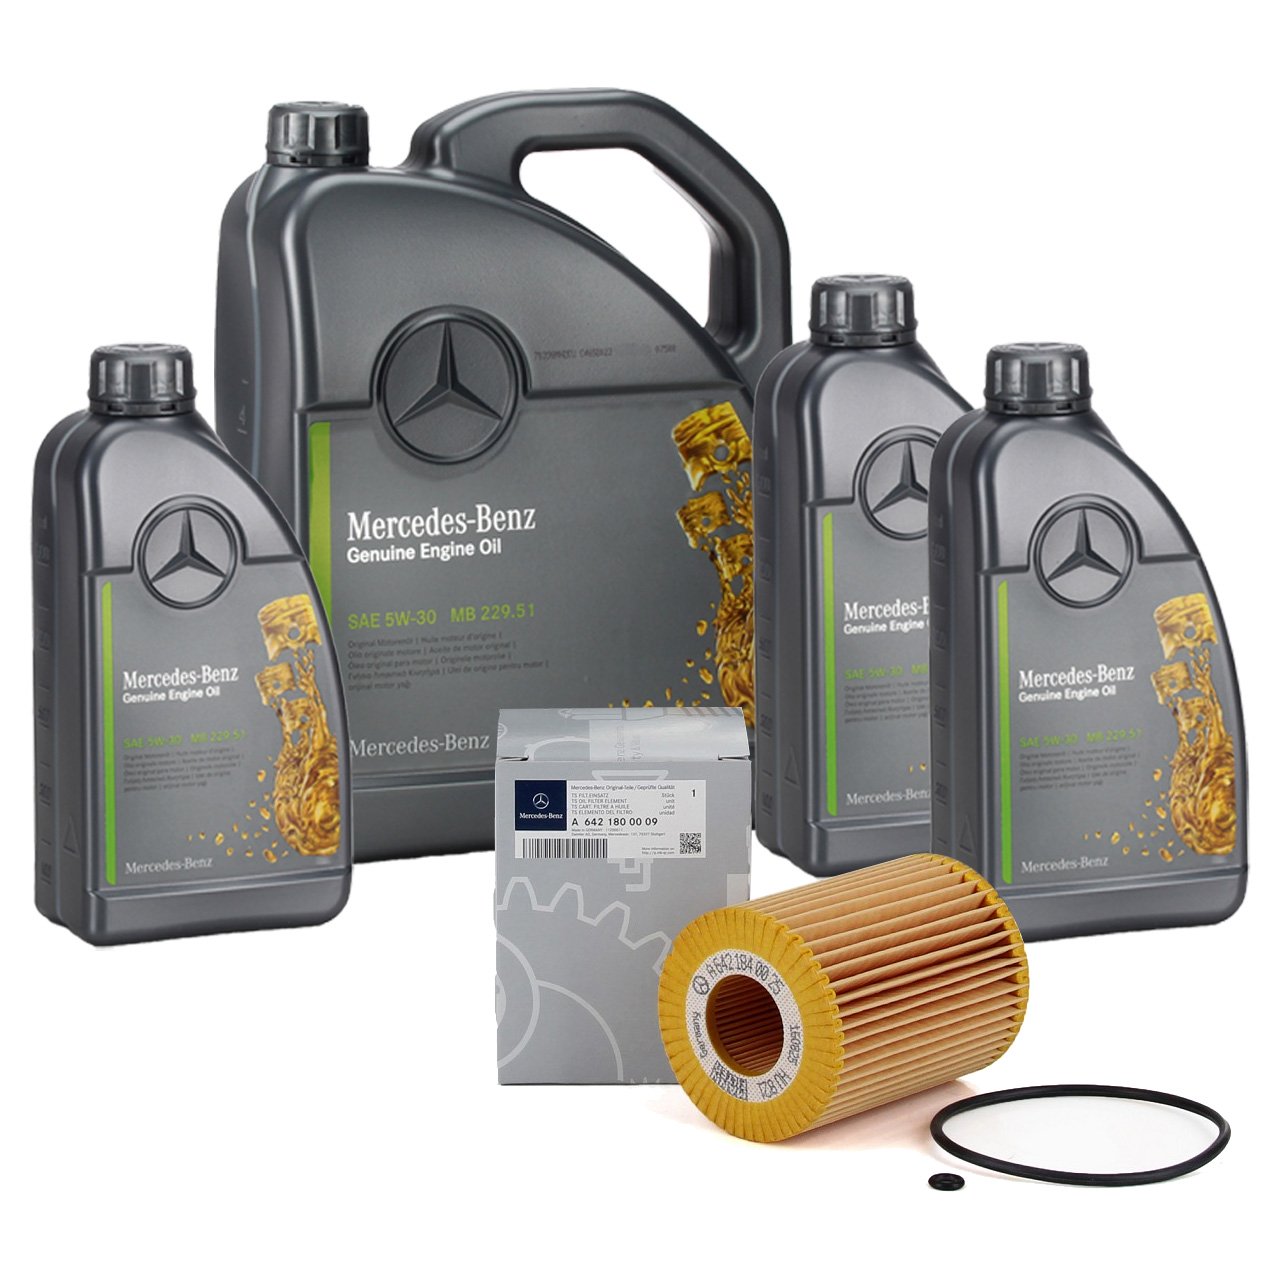 ORIGINAL Mercedes-Benz ÖL Motoröl 5W30 MB 229.51 8 Liter + Ölfilter 6421800009